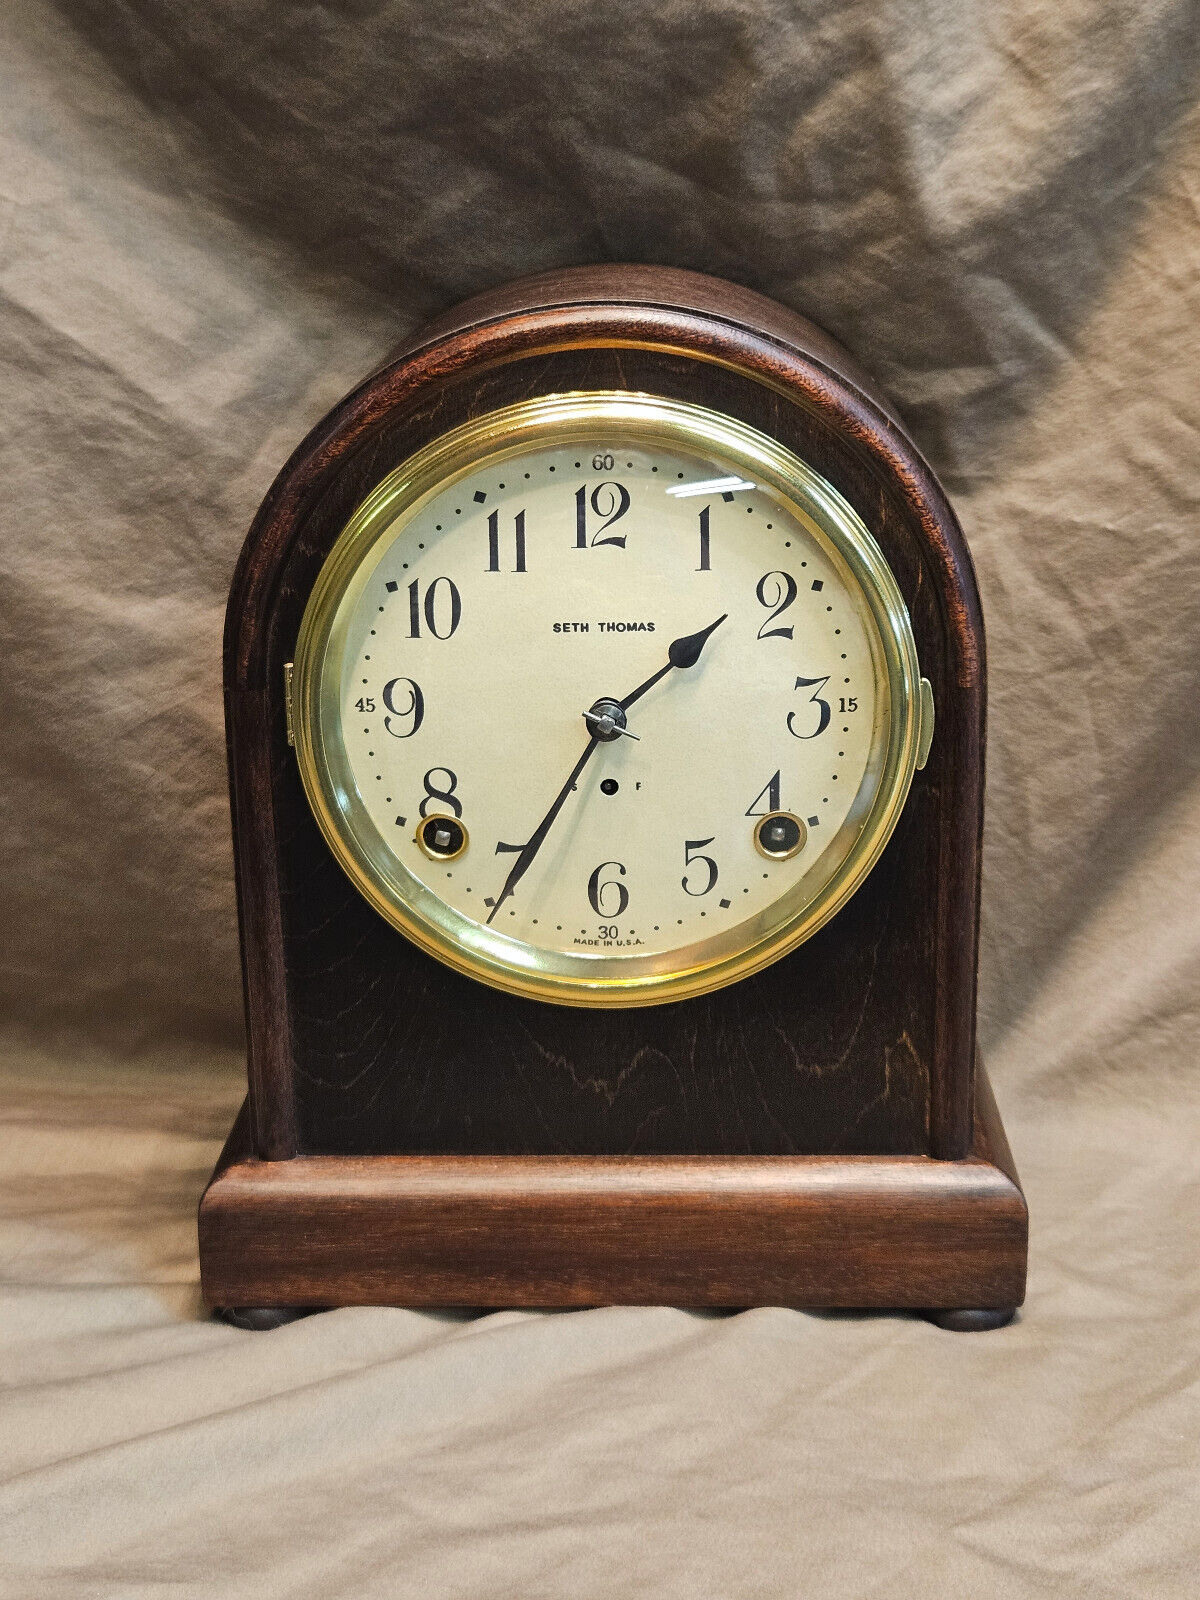 Restored Antique Seth Thomas Mantel Clock circa 1910 Original Movement